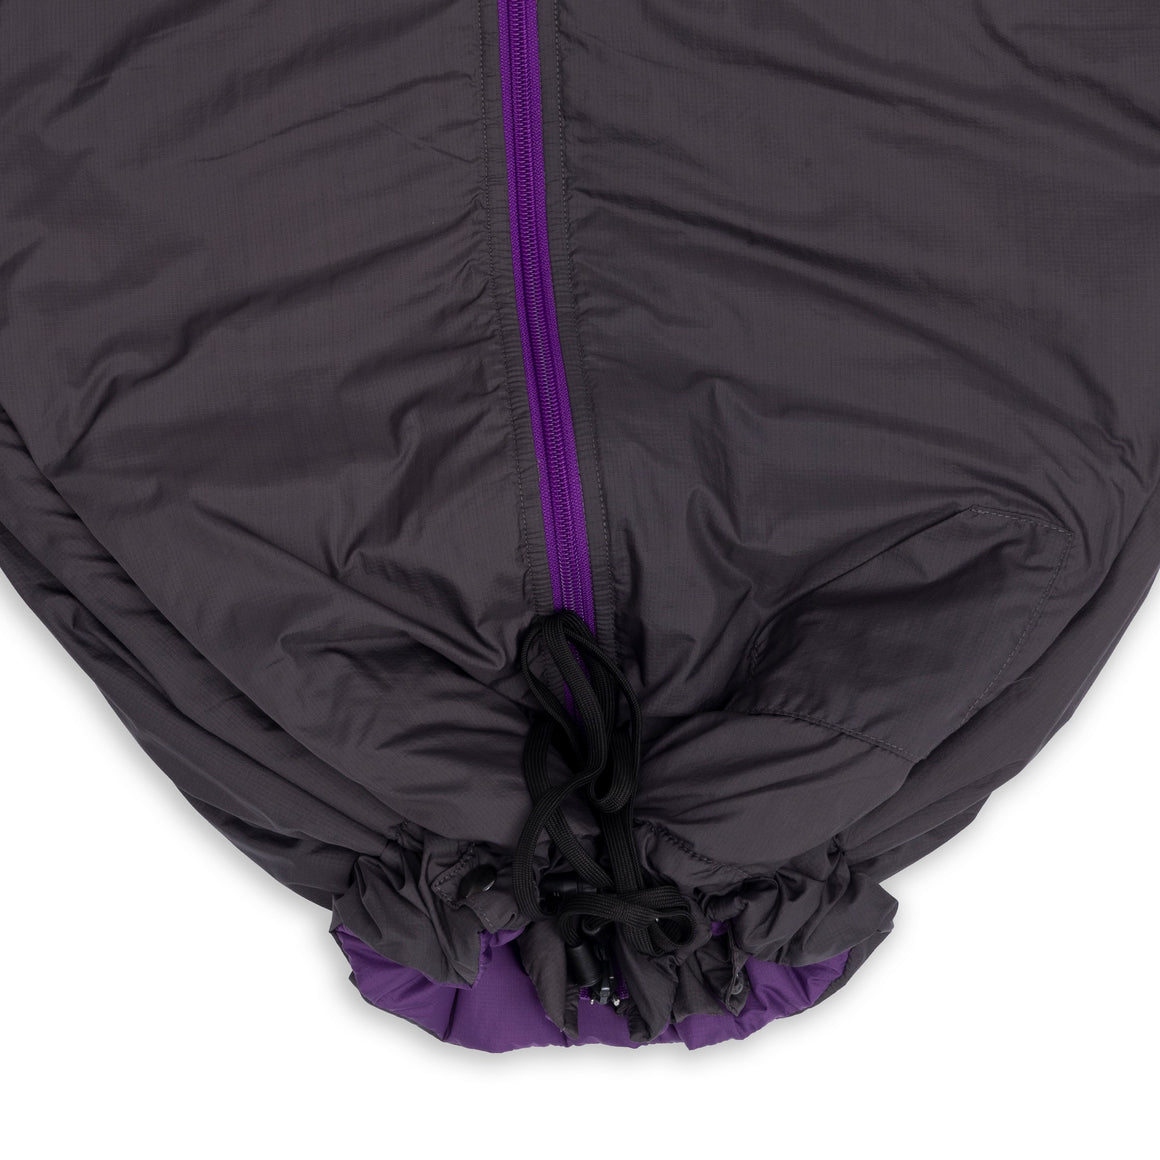 Cozybag Comfort - the perfect camping sleeping bag